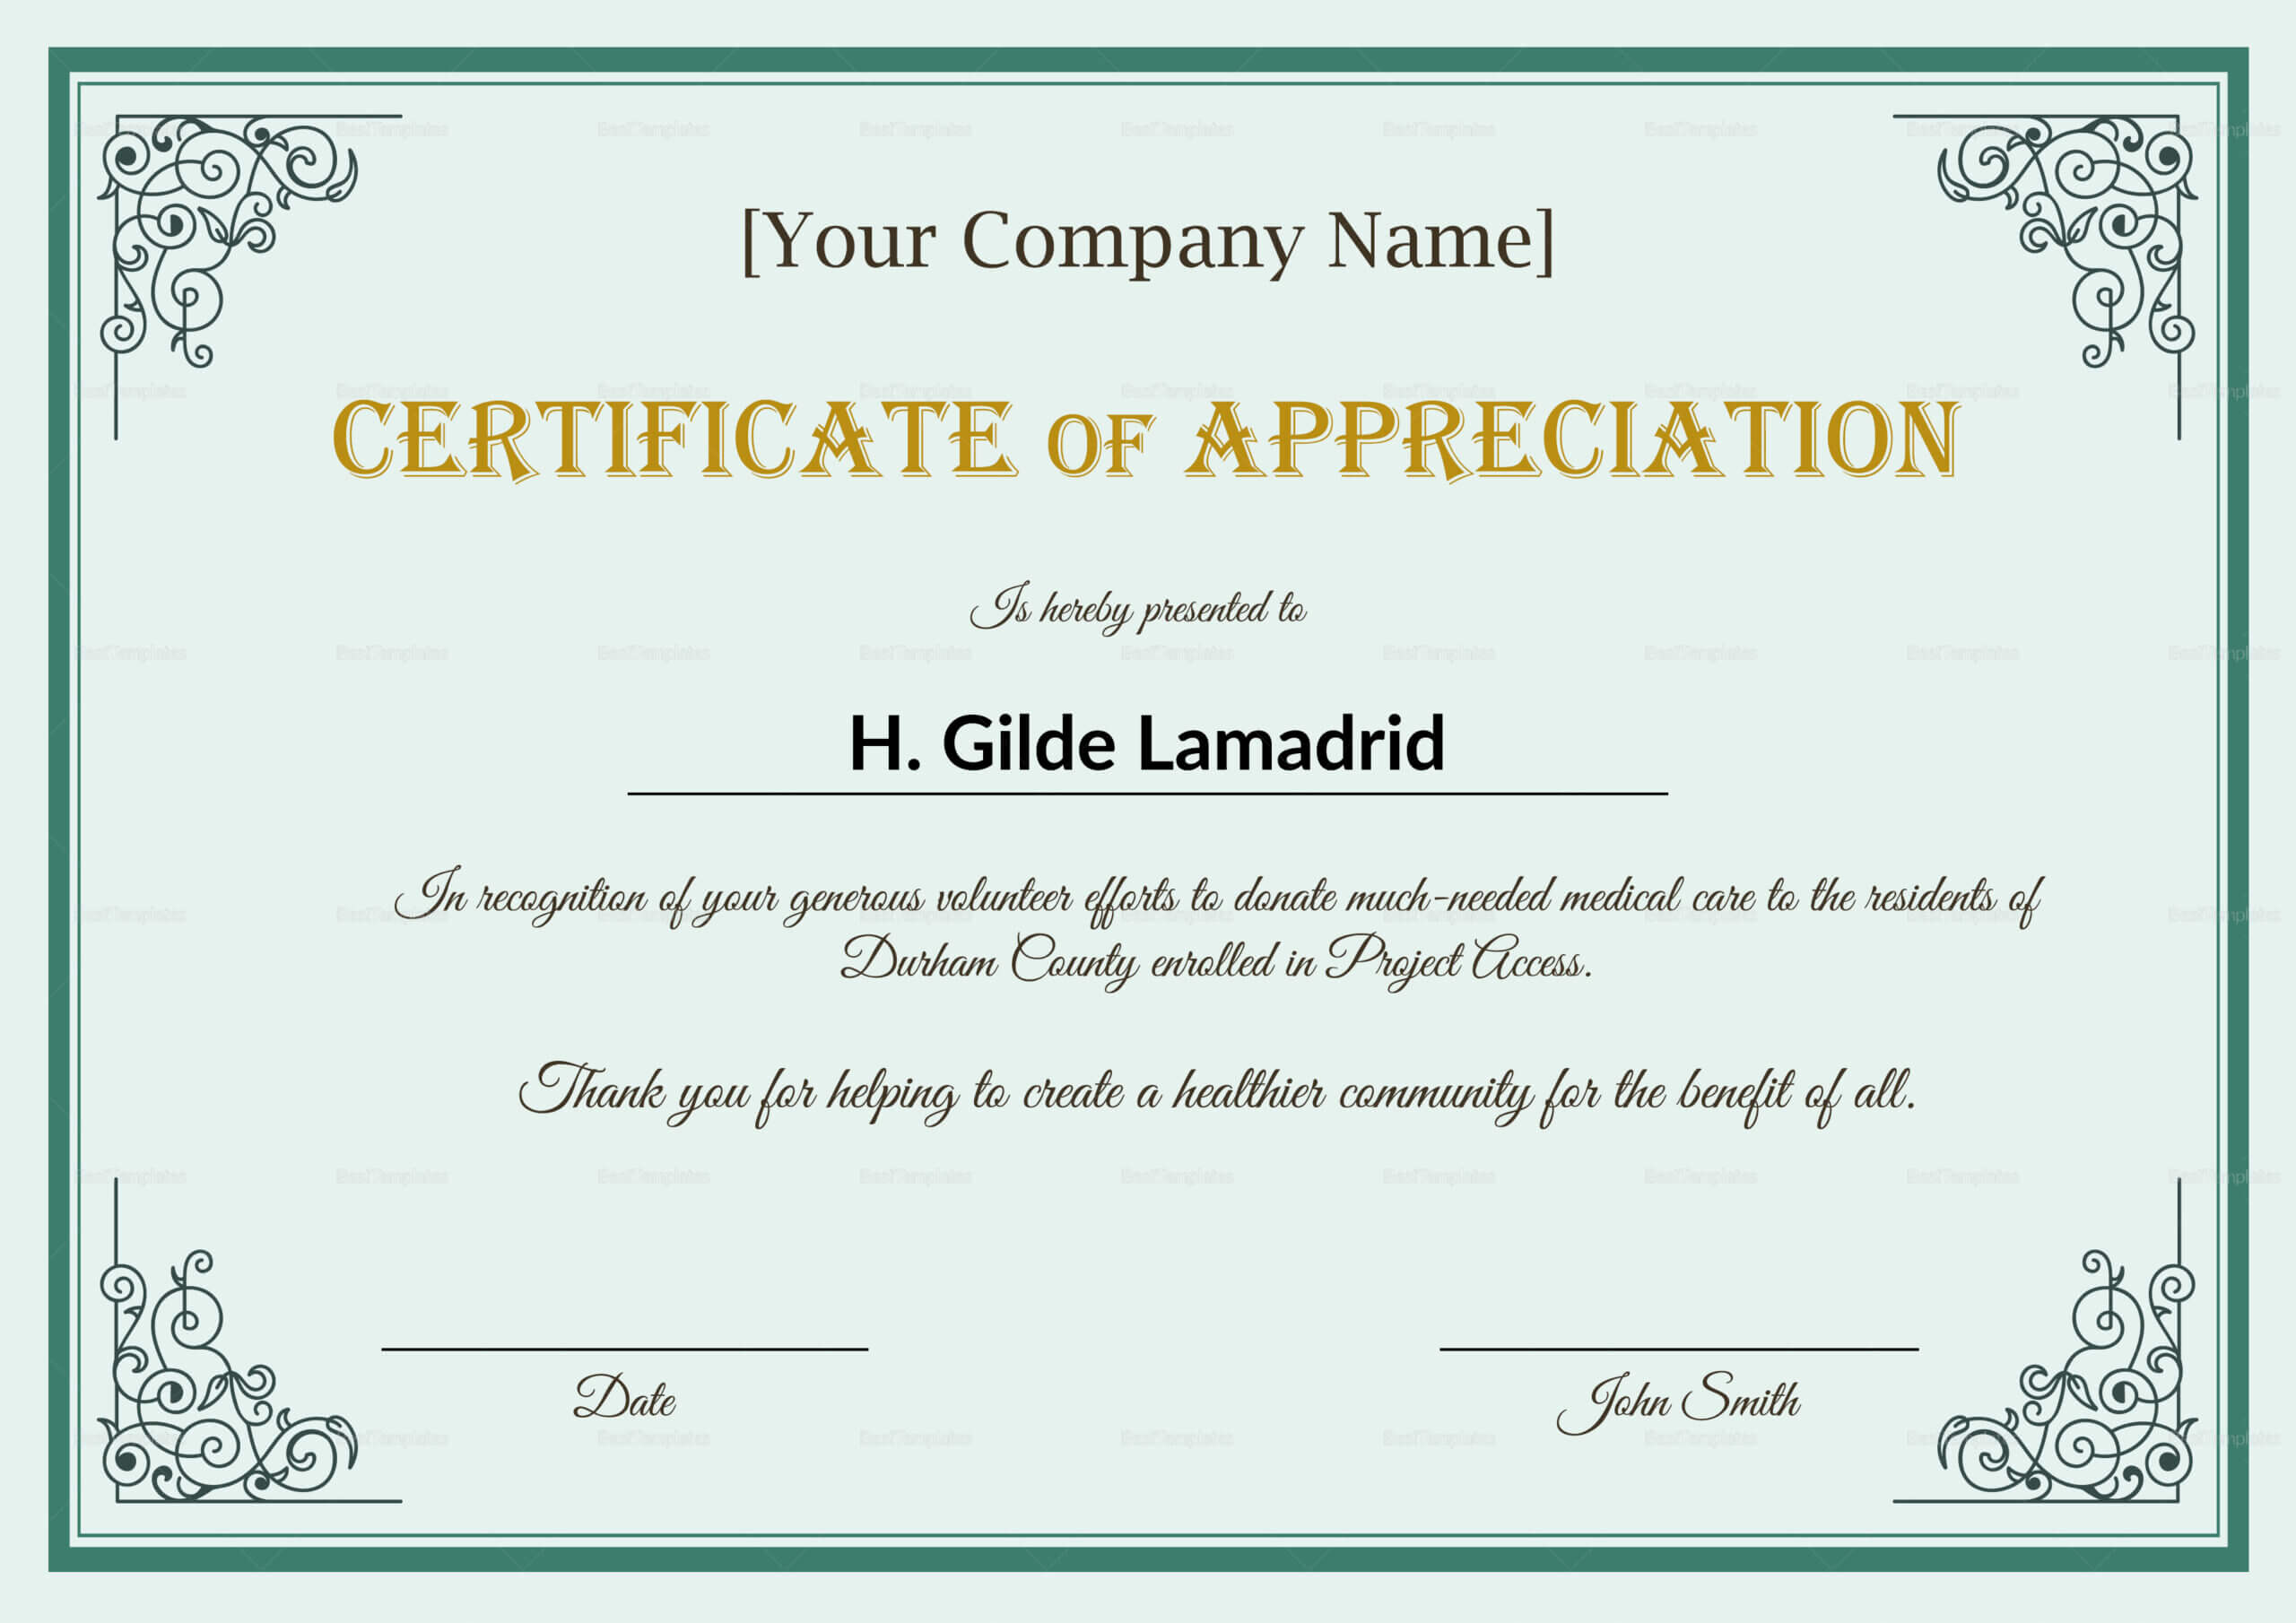 employee-recognition-certificates-templates-calep-regarding-best